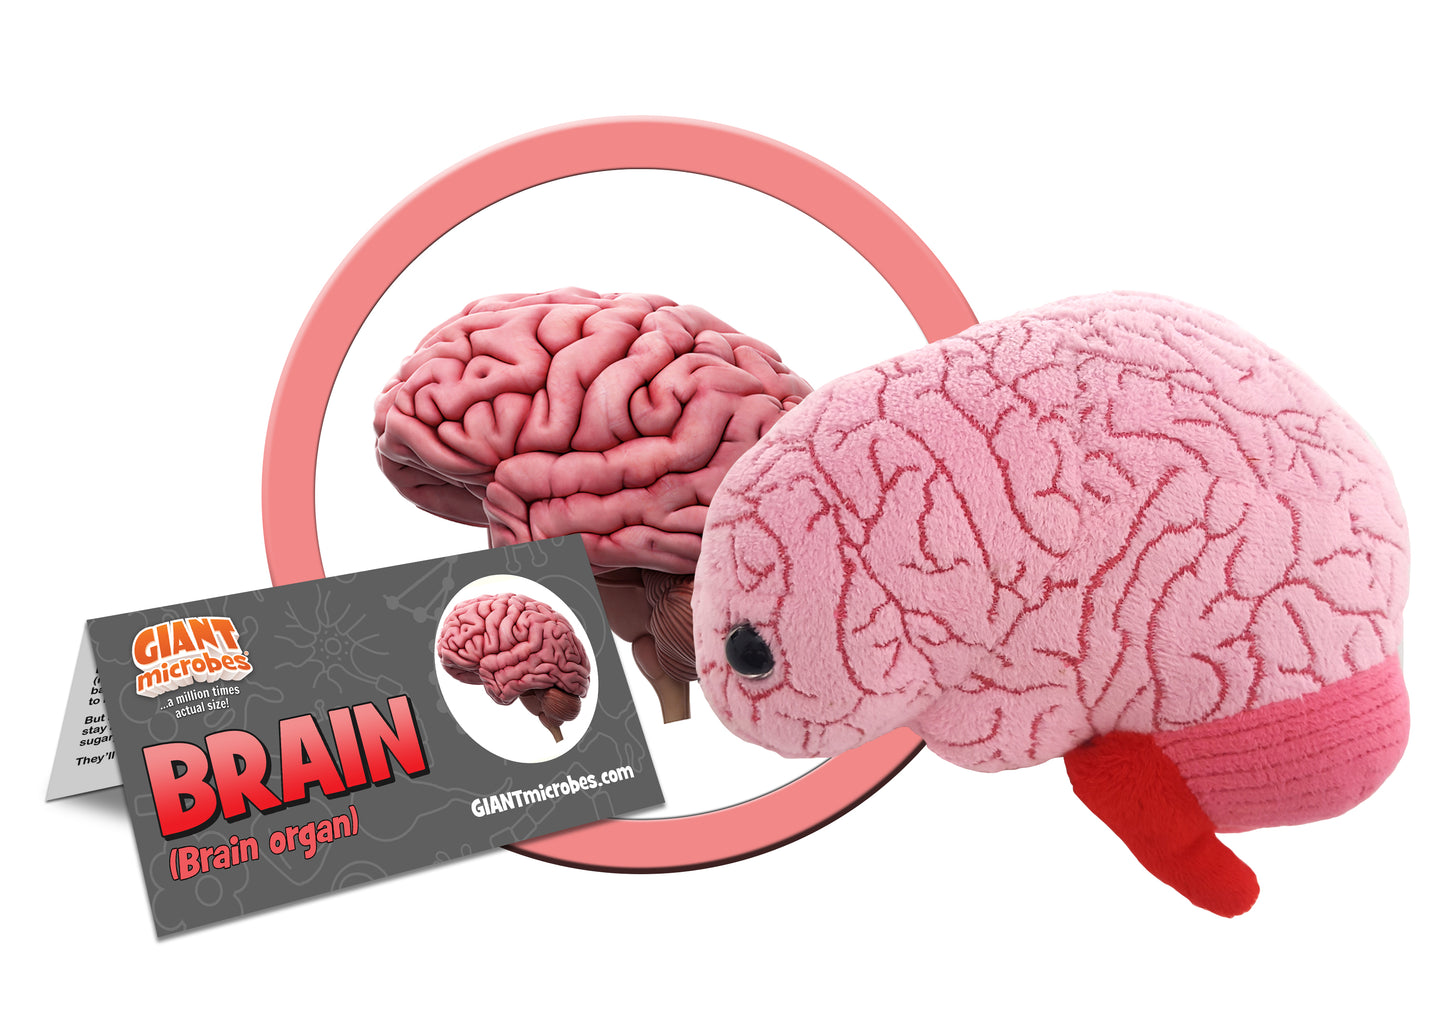 Brain organ